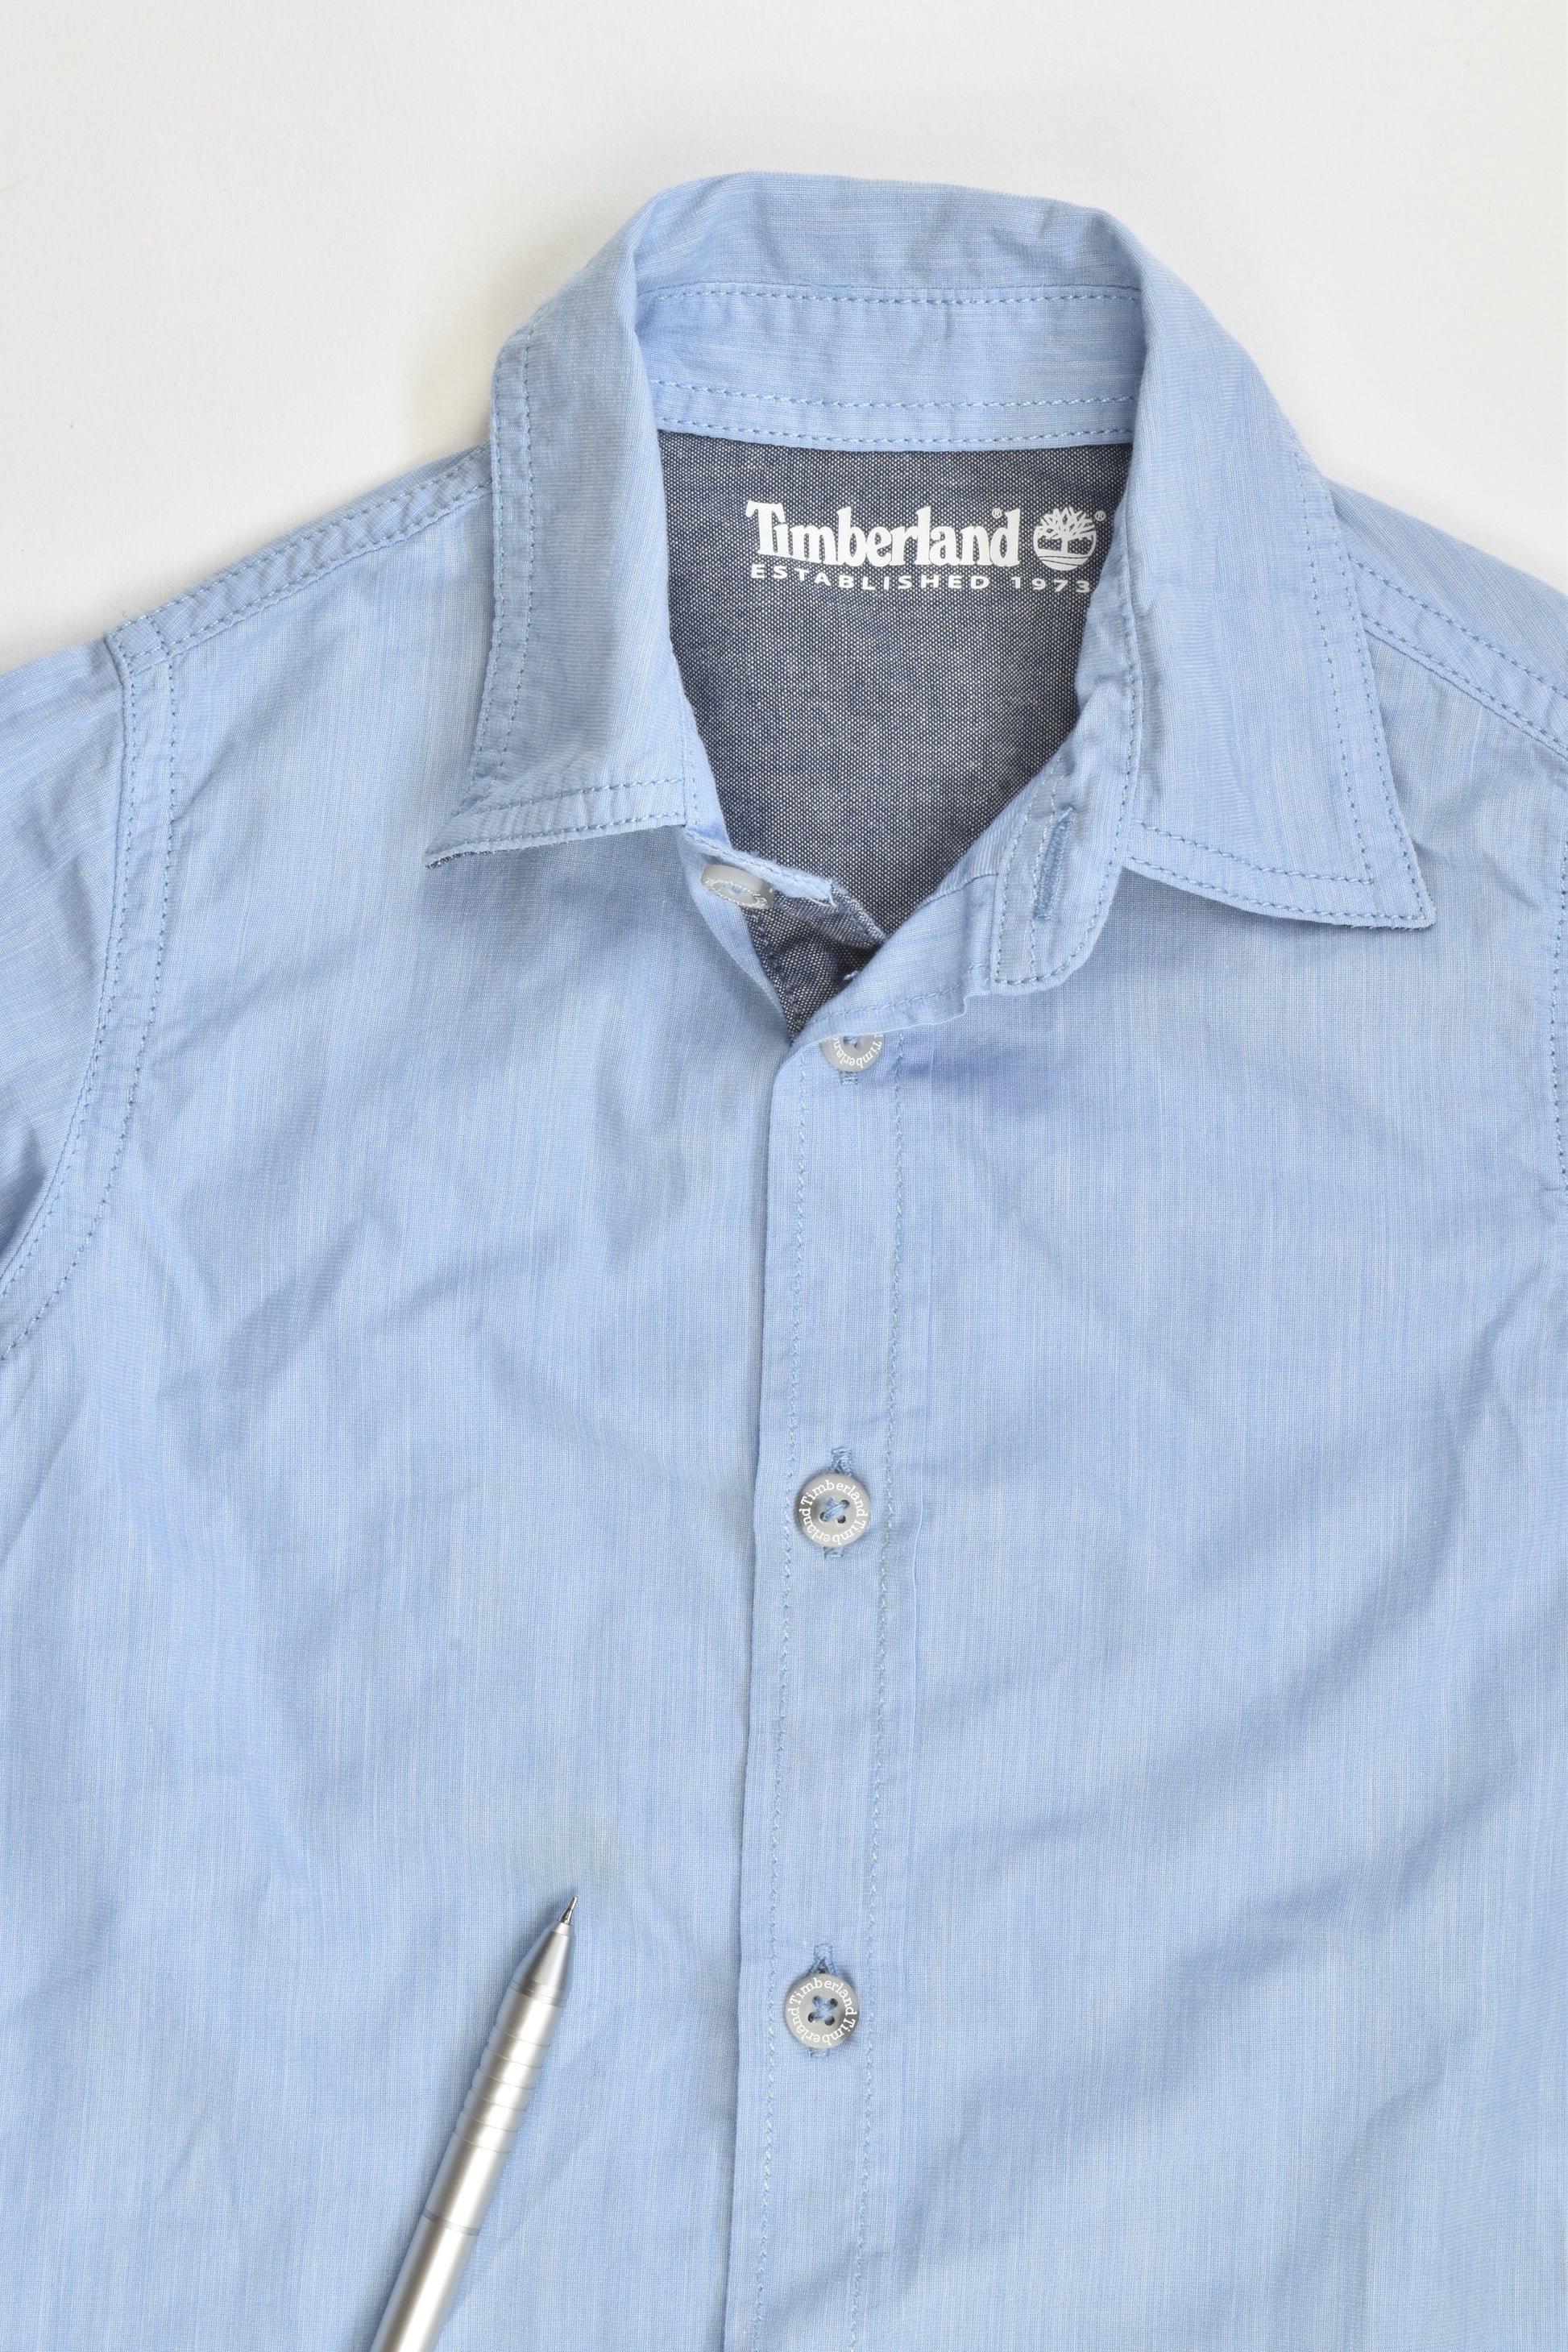 Timberland Size 1-2 Collared Shirt